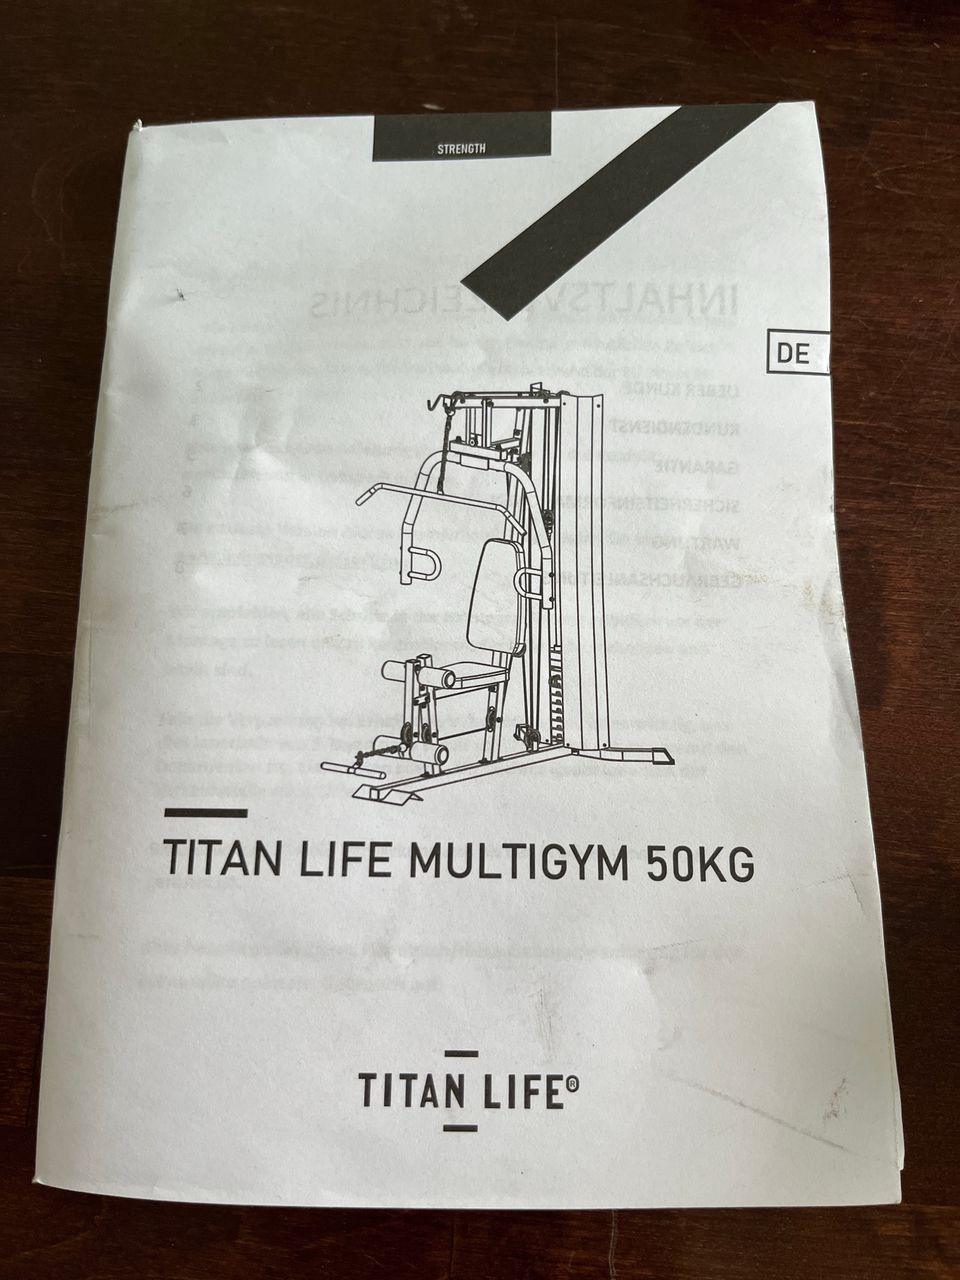 Titan life multigym 50kg